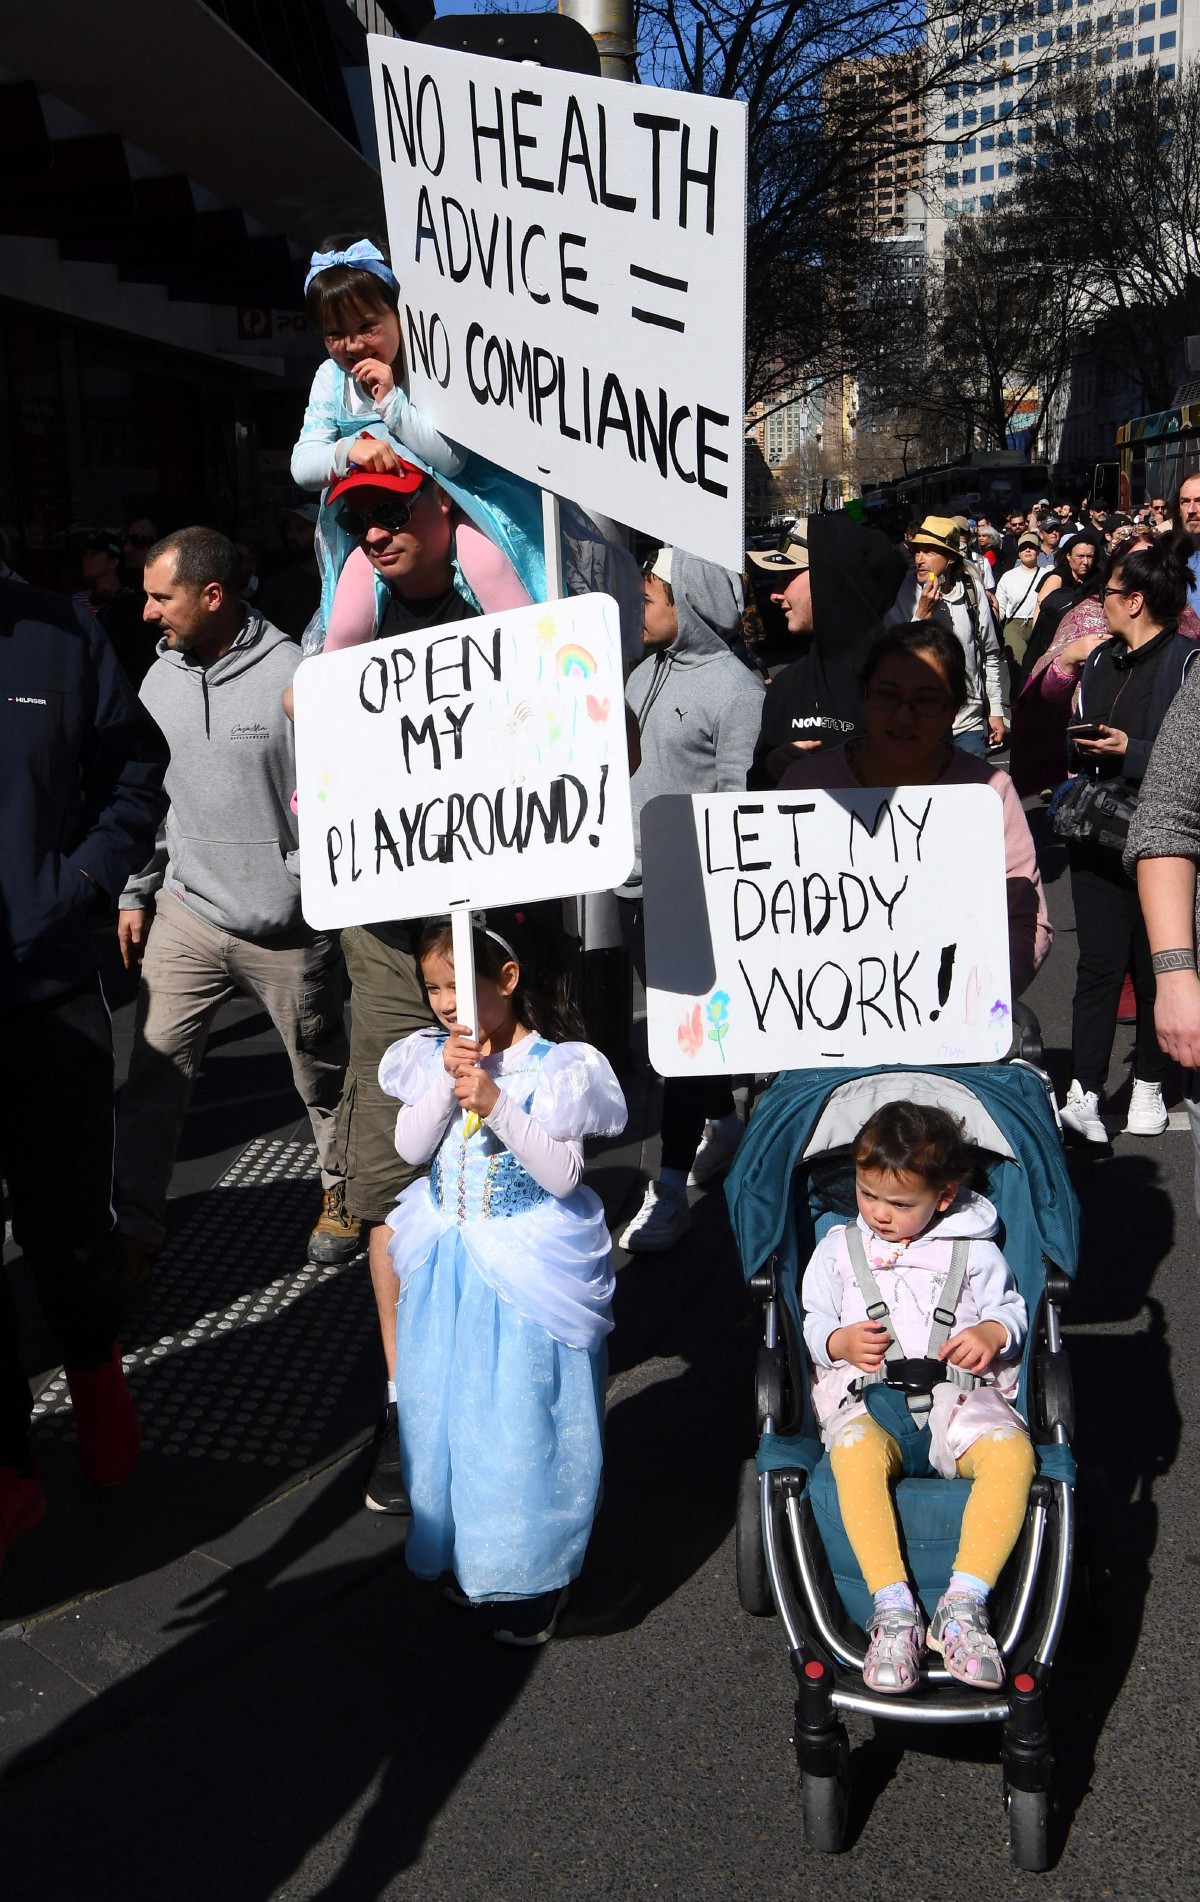 Kanak-kanak turut dibawa menyertai protes di Melbourne. - FOTO AFP